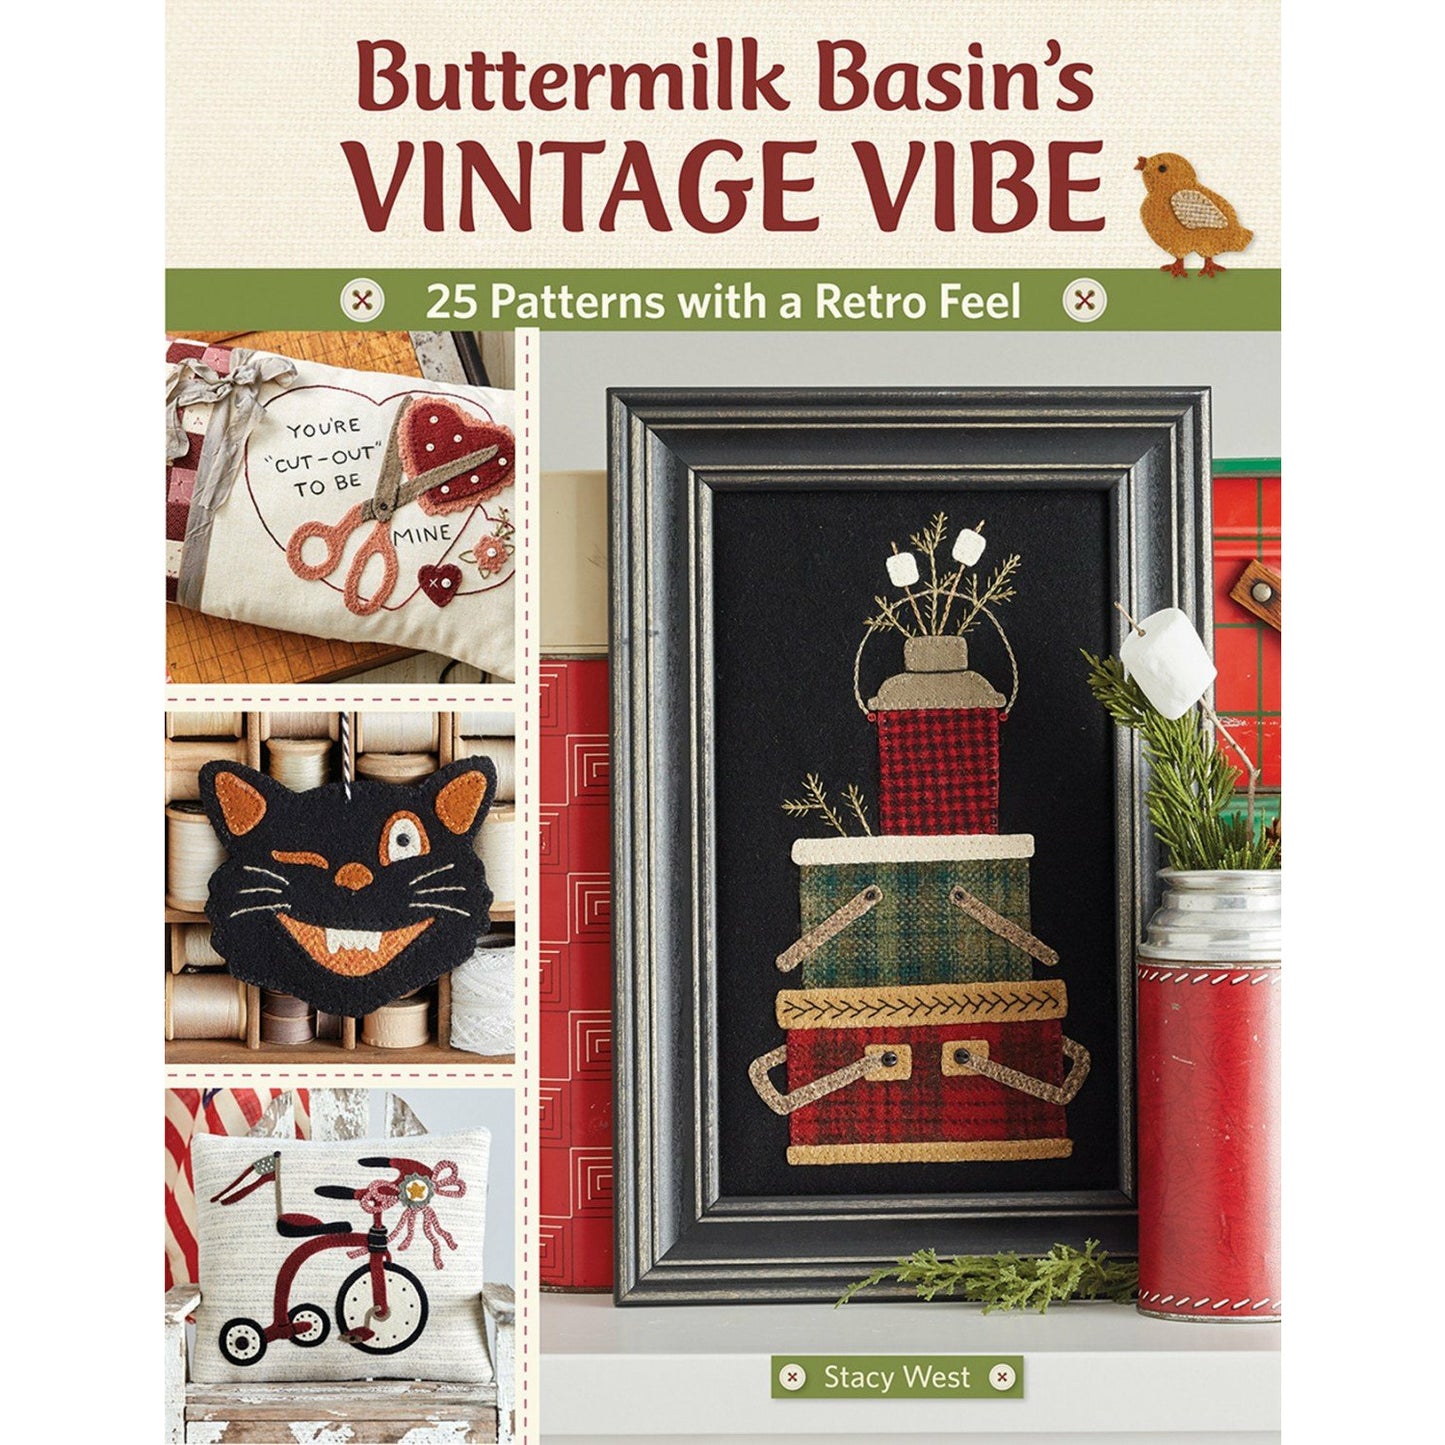 Buttermilk Basin's Vintage Vibe